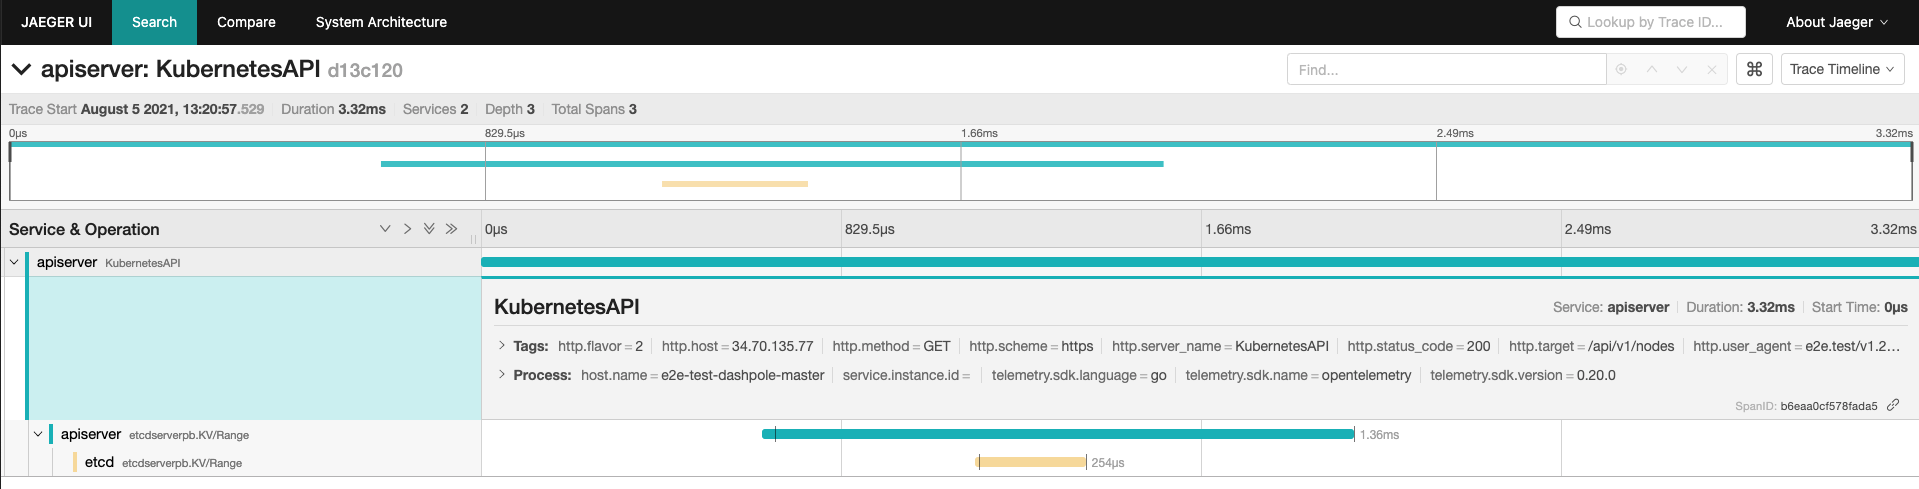 Jaeger screenshot showing API server and etcd trace